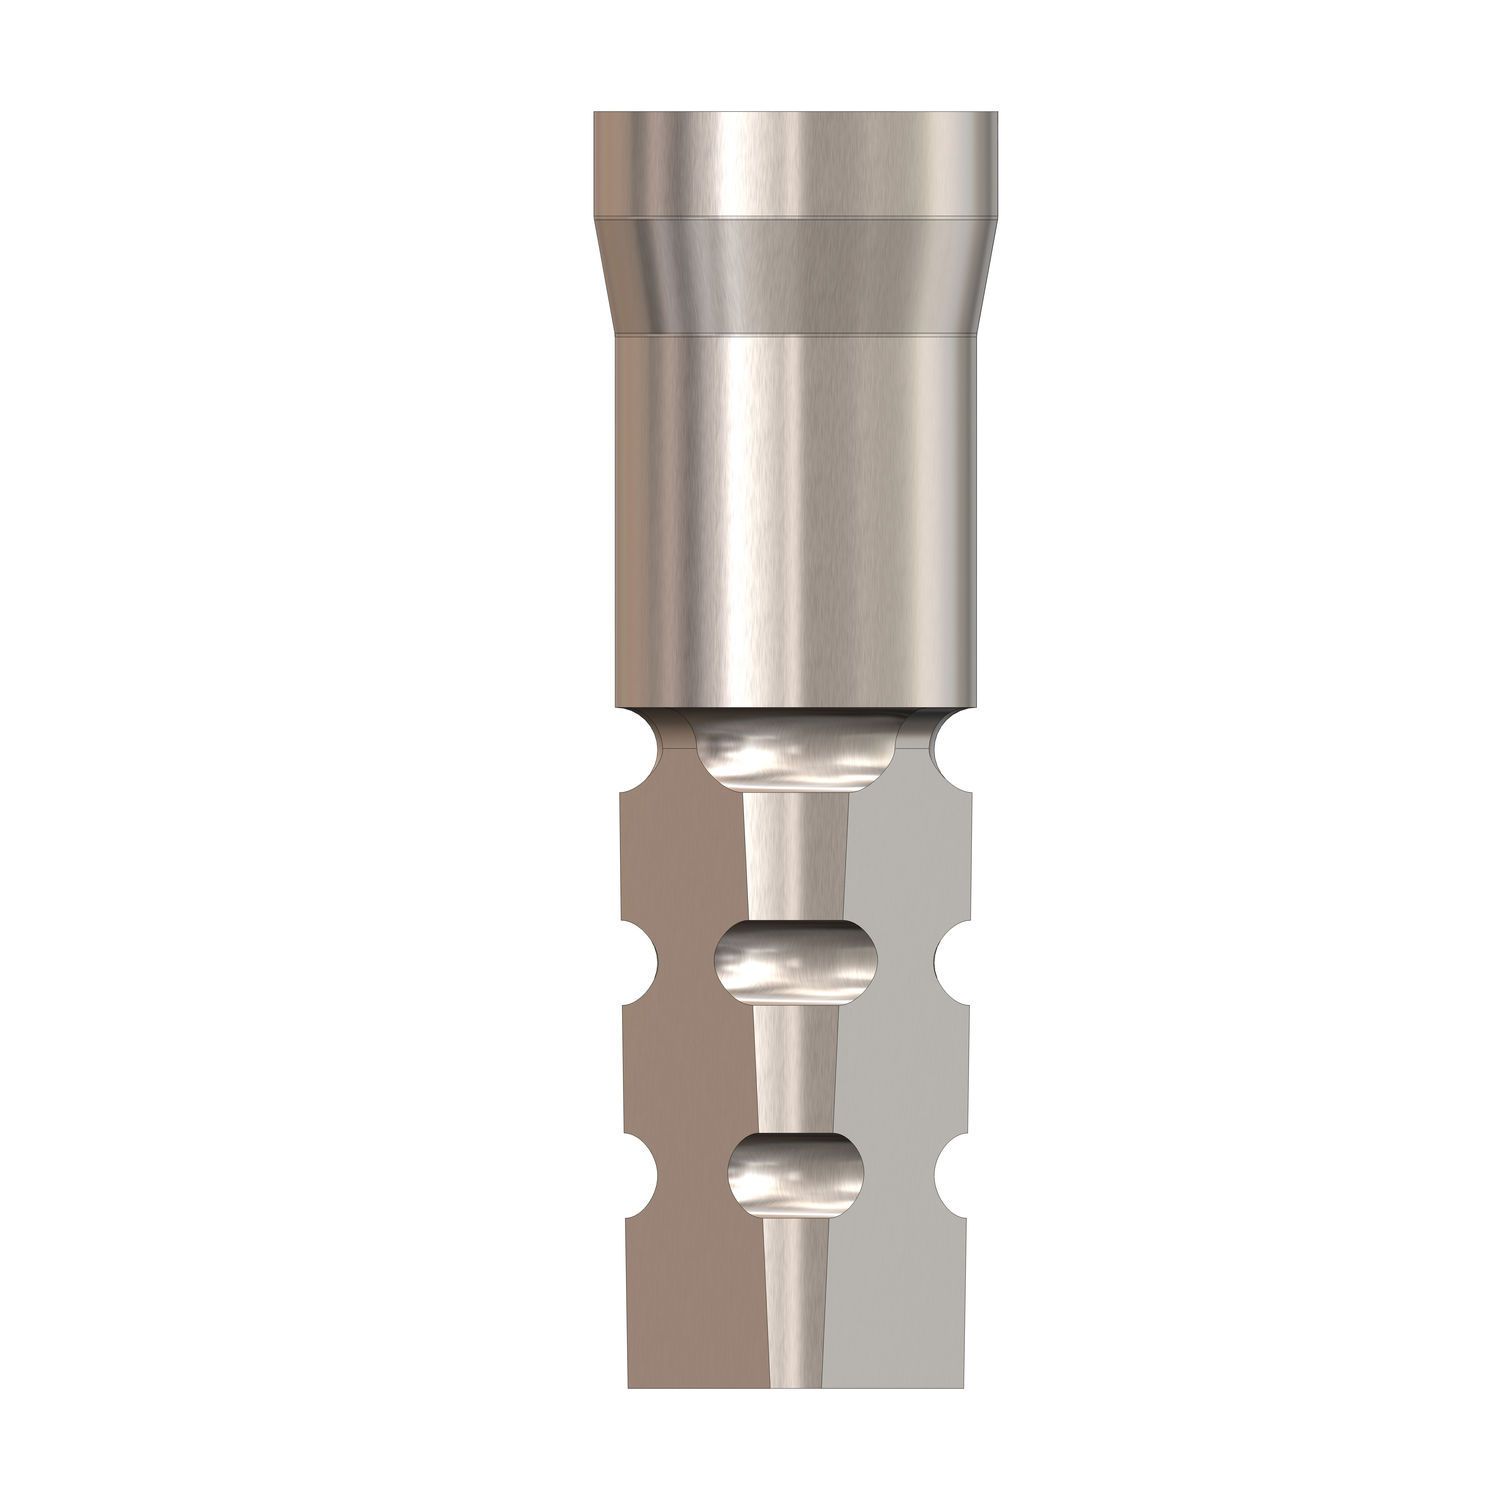 Straight dental implant analog / stainless steel CO-8040 Cortex-Dental Implants Industries Ltd.